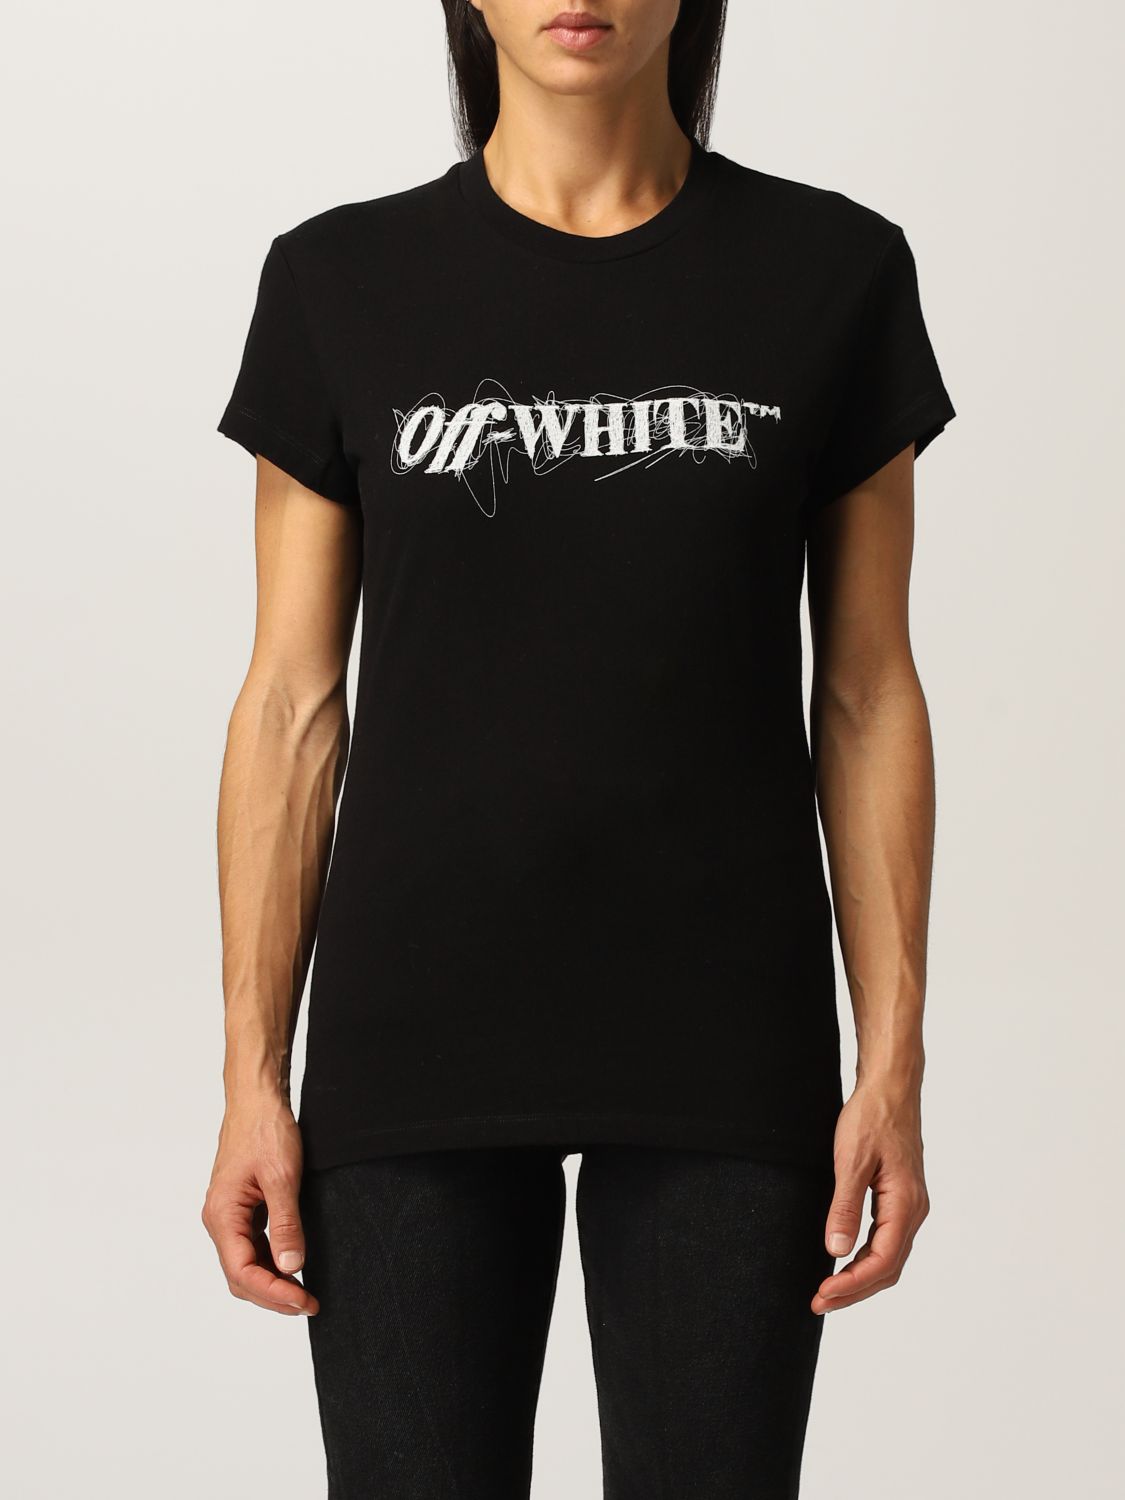 off white t shirt women's